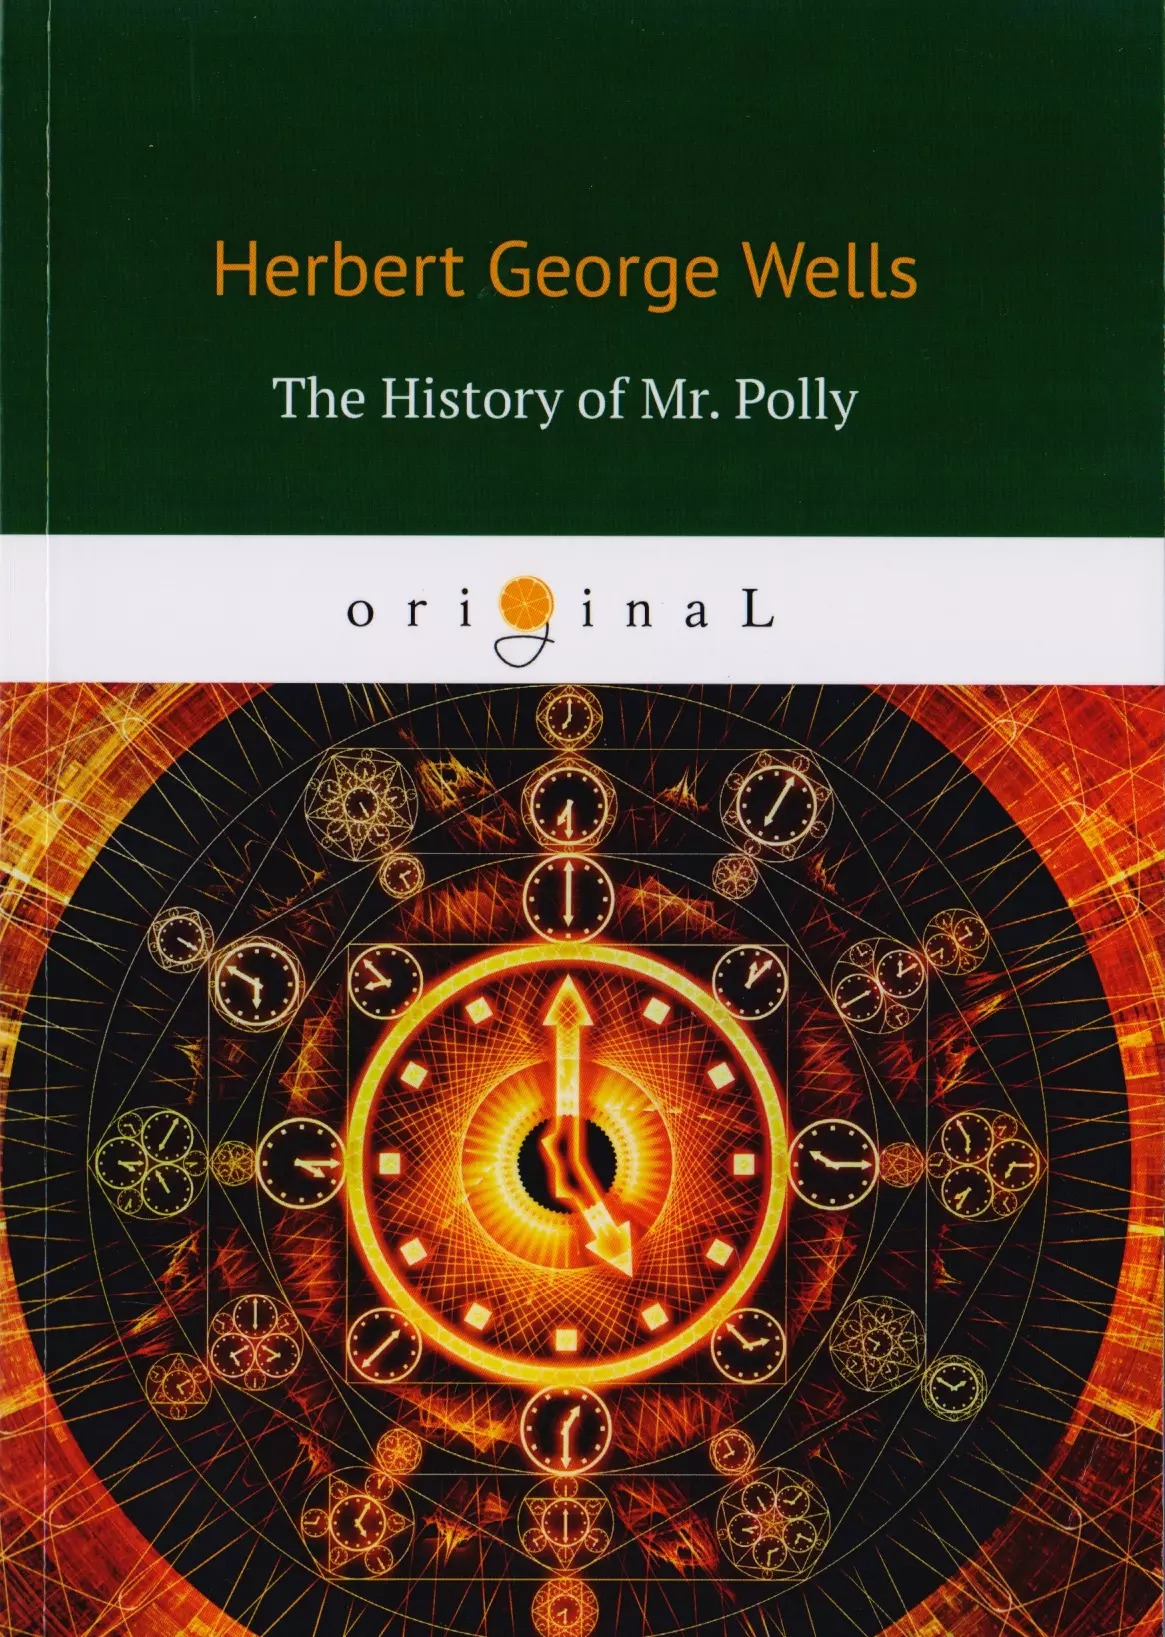 Уэллс Герберт Джордж - The History of Mr. Polly